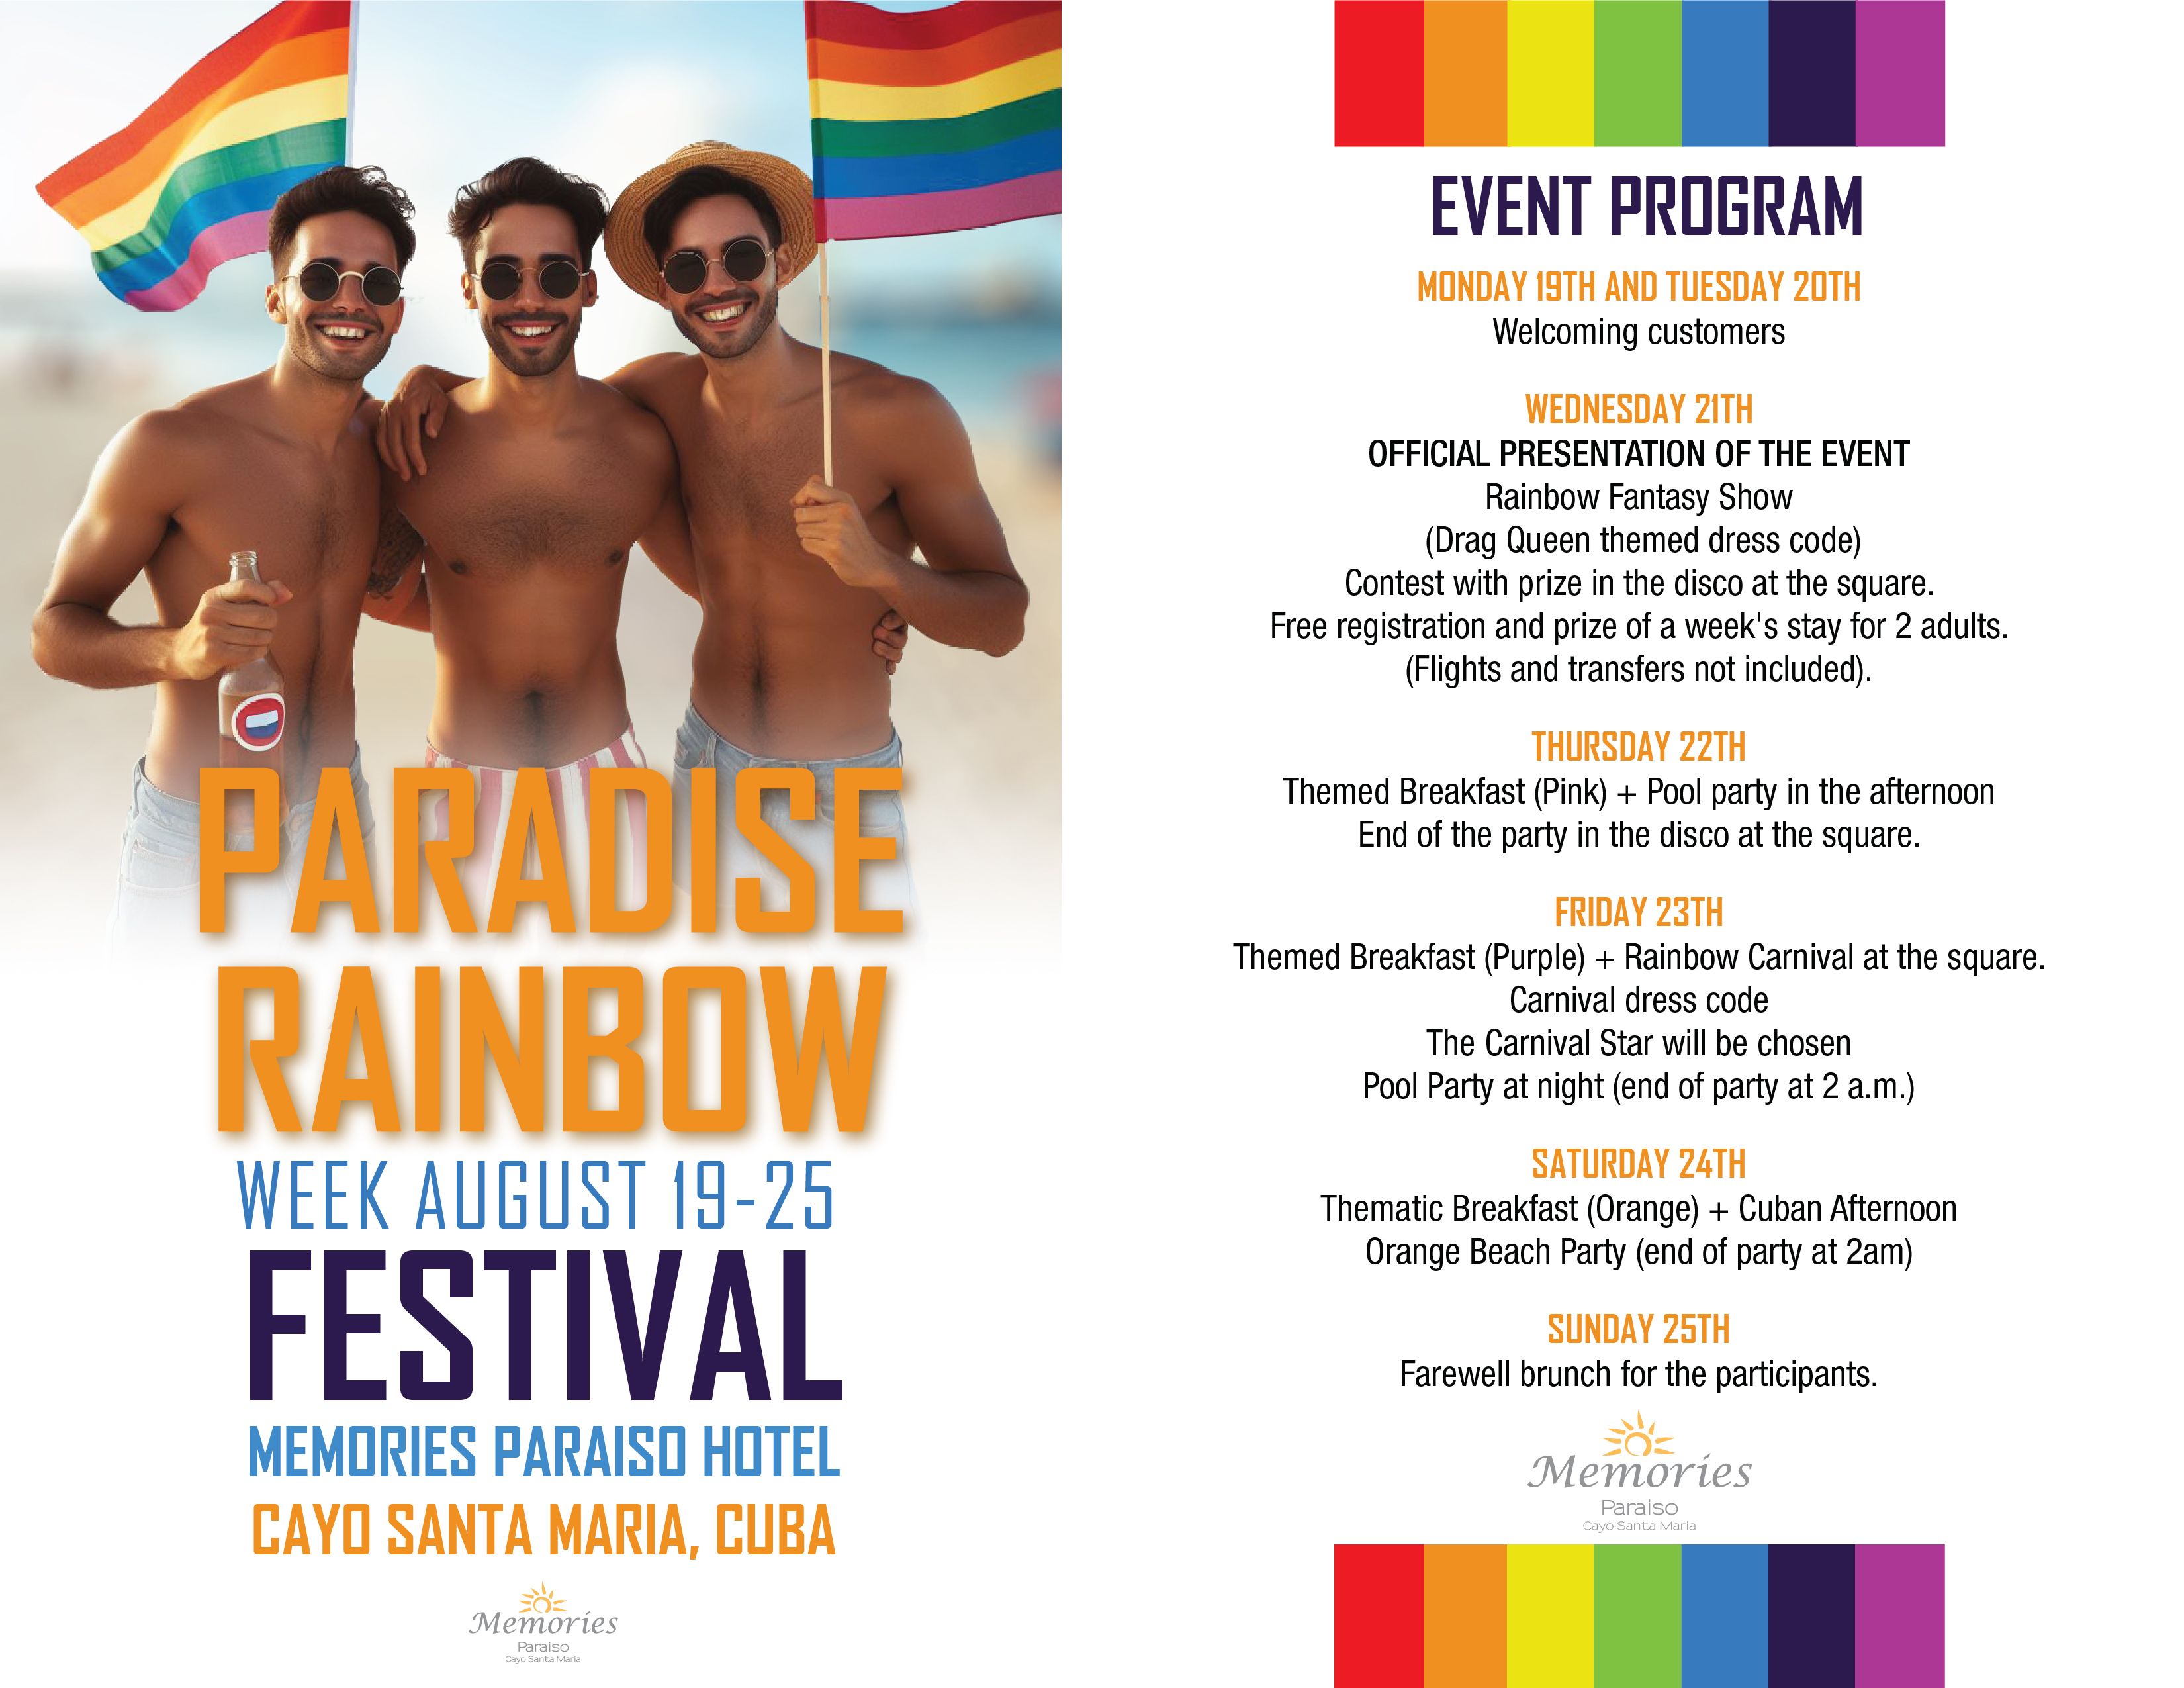 join-memories-paraiso-hotel-paradise-rainbow-festival-2.jpg